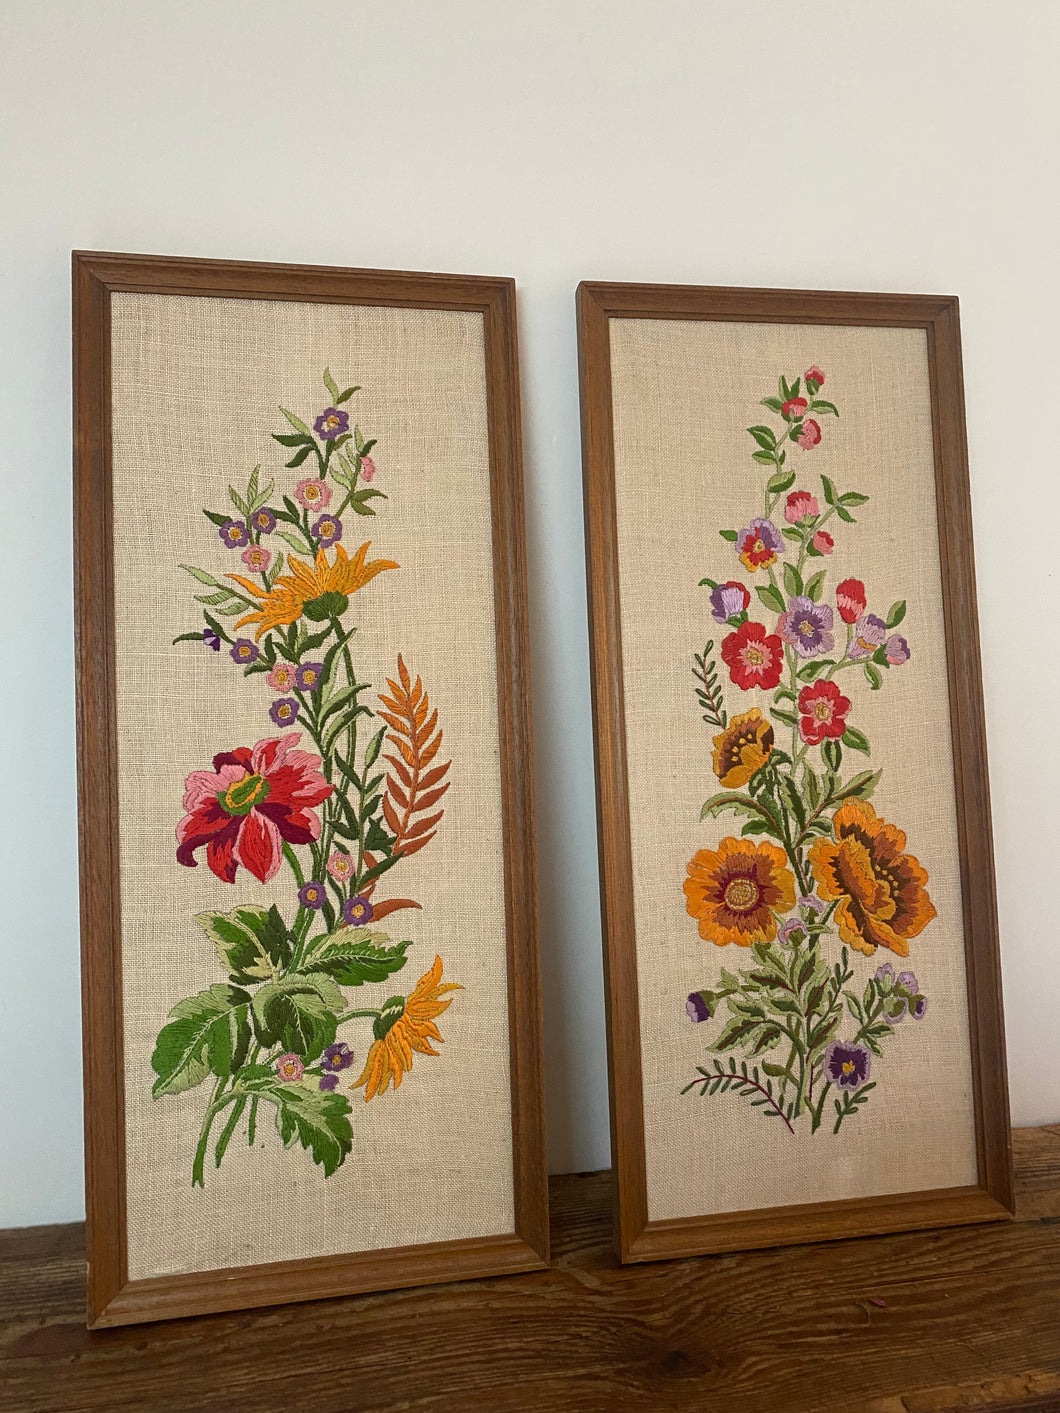 Vintage Embroidery frames